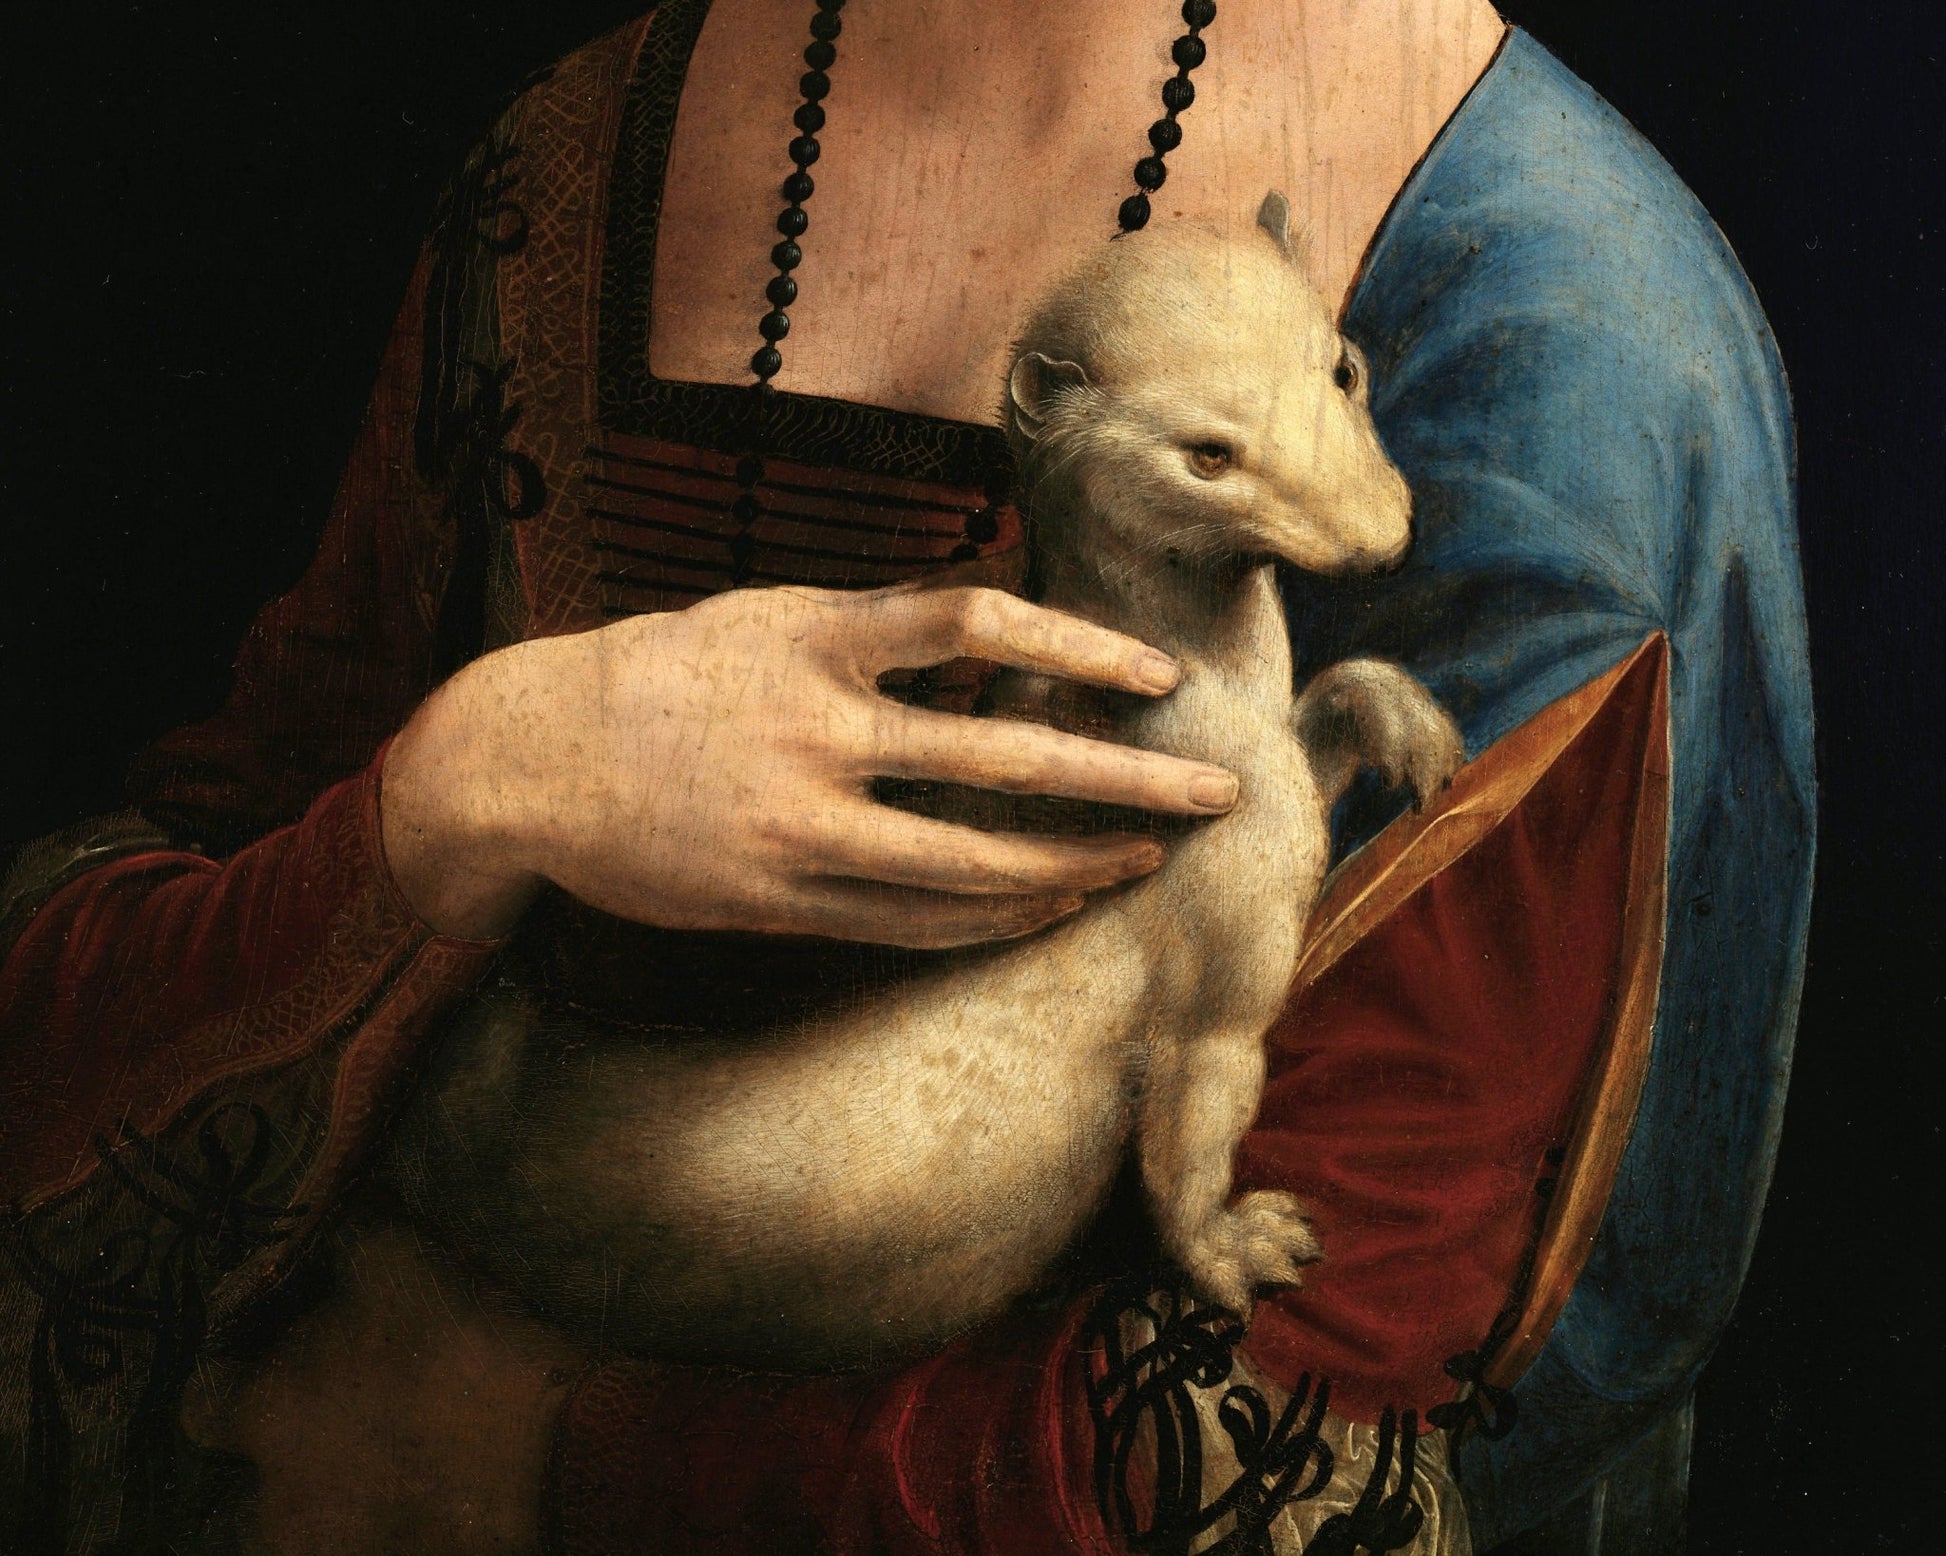 Leonardo da Vinci "Lady with an Ermine" (c.1489) - Mabon Gallery